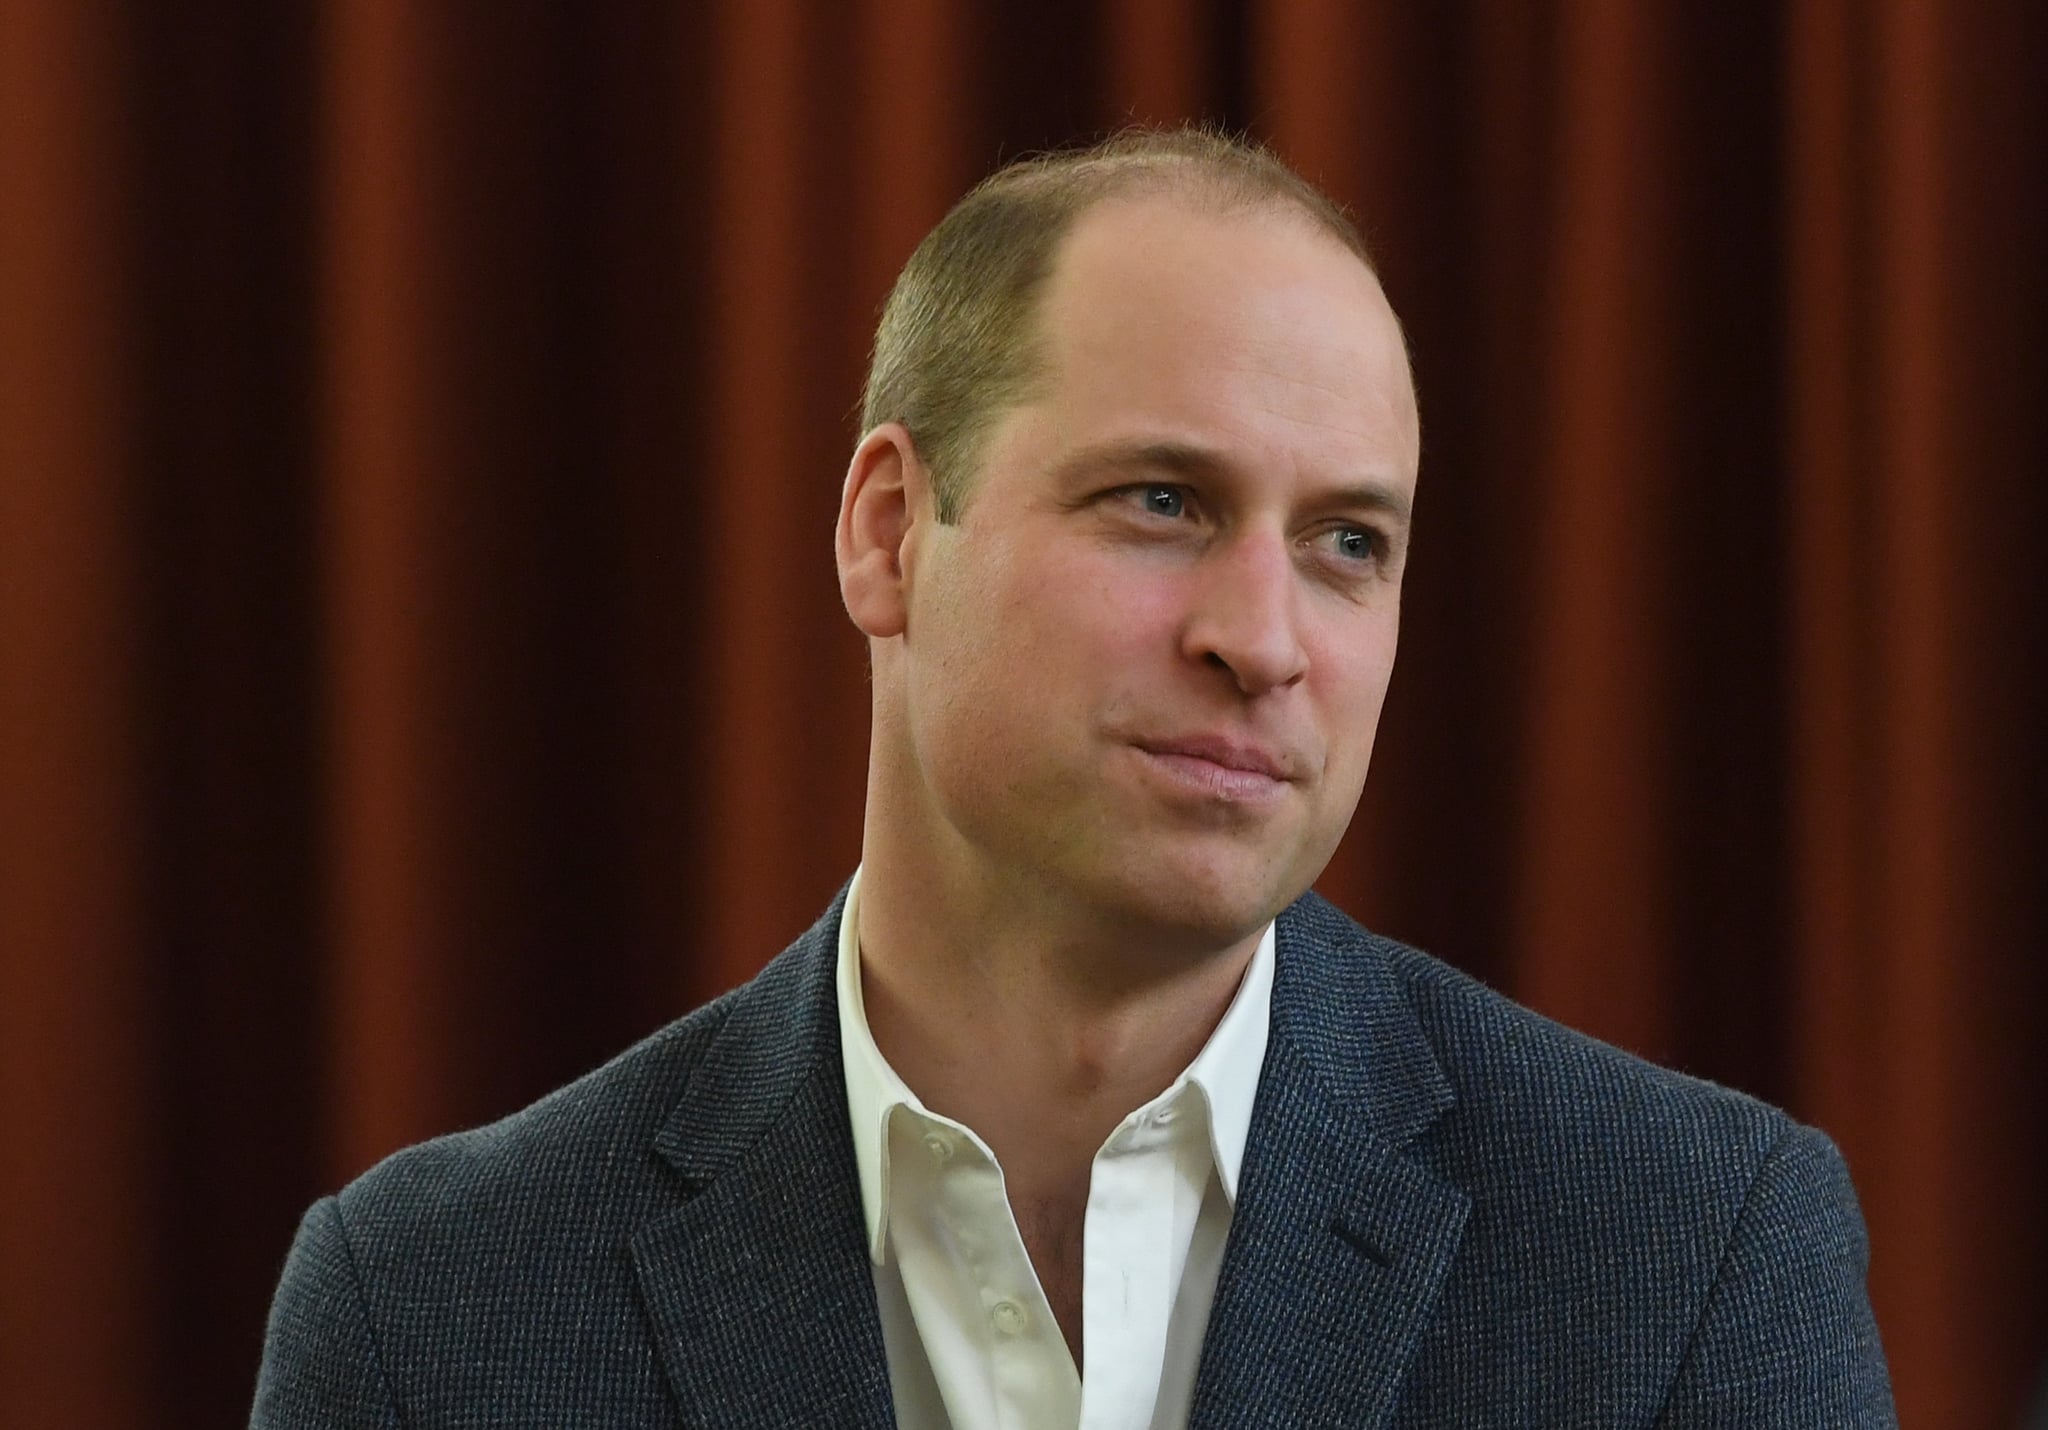 LONDON, ENGLAND - FEBRUARY 14: Prince William, Duke of Cambridge visits the